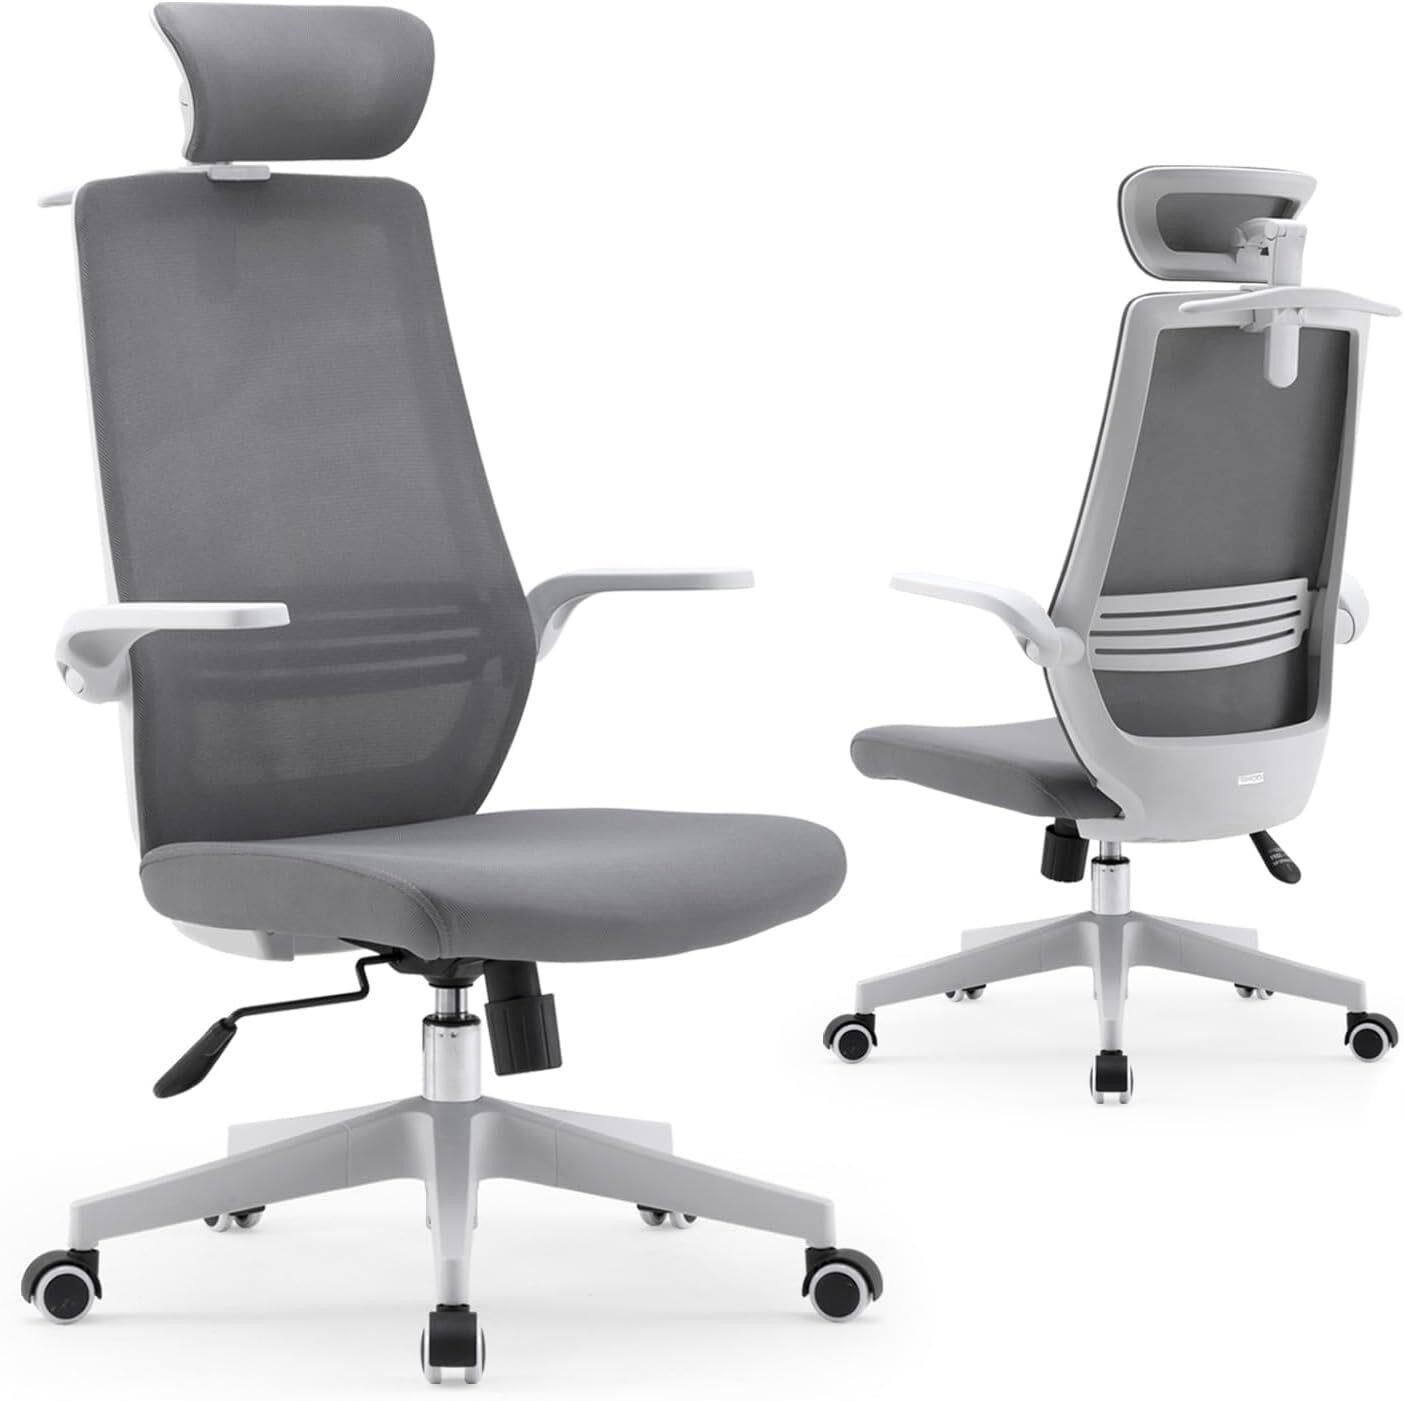 SIHOO M76A Ergonomic Office Chair  Gray